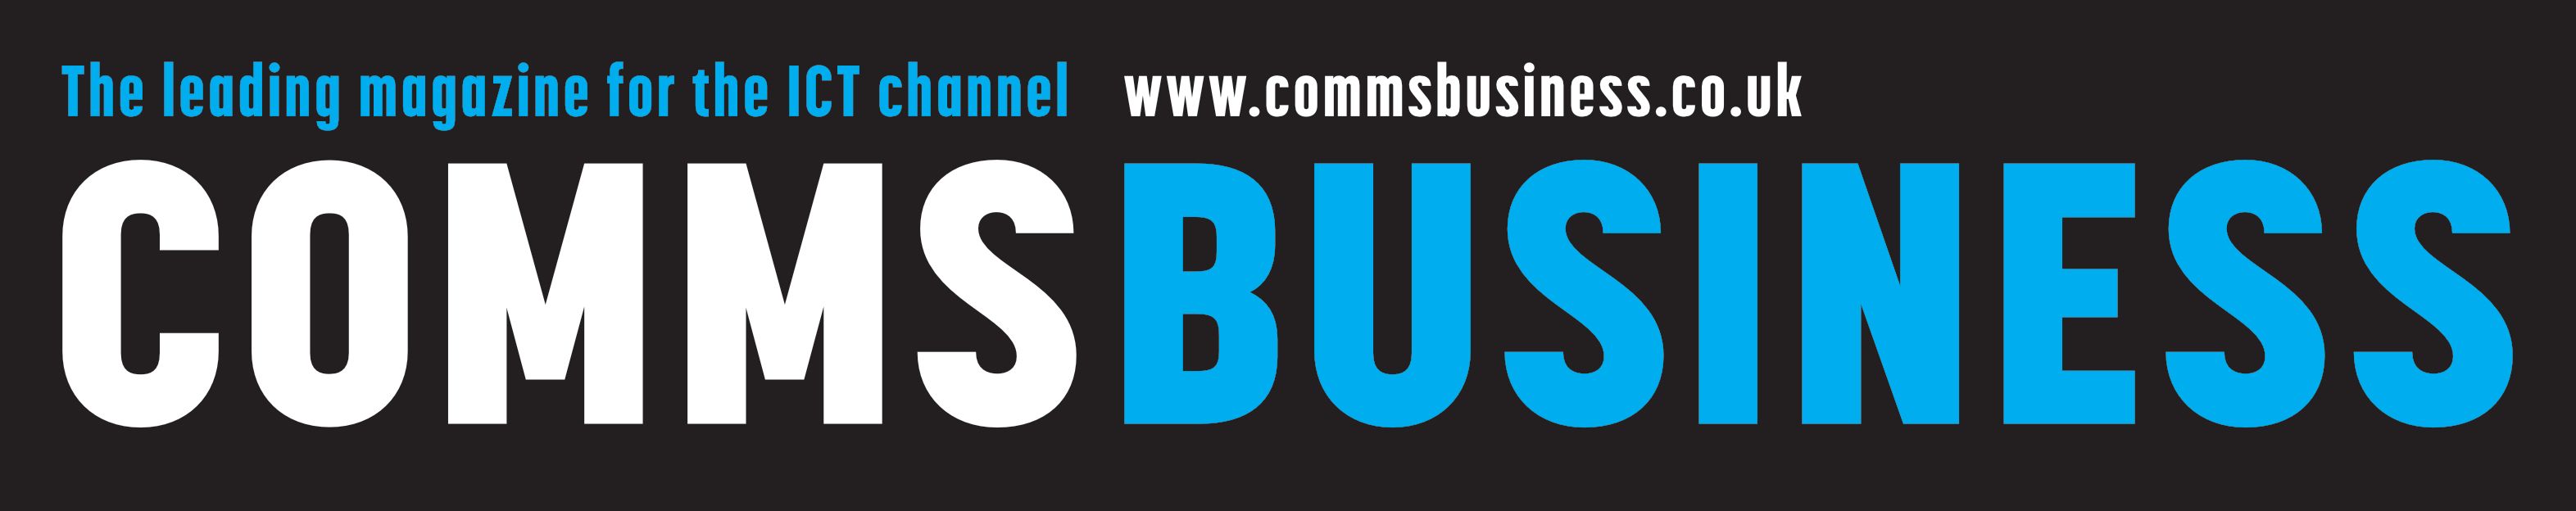 Comms Business logo